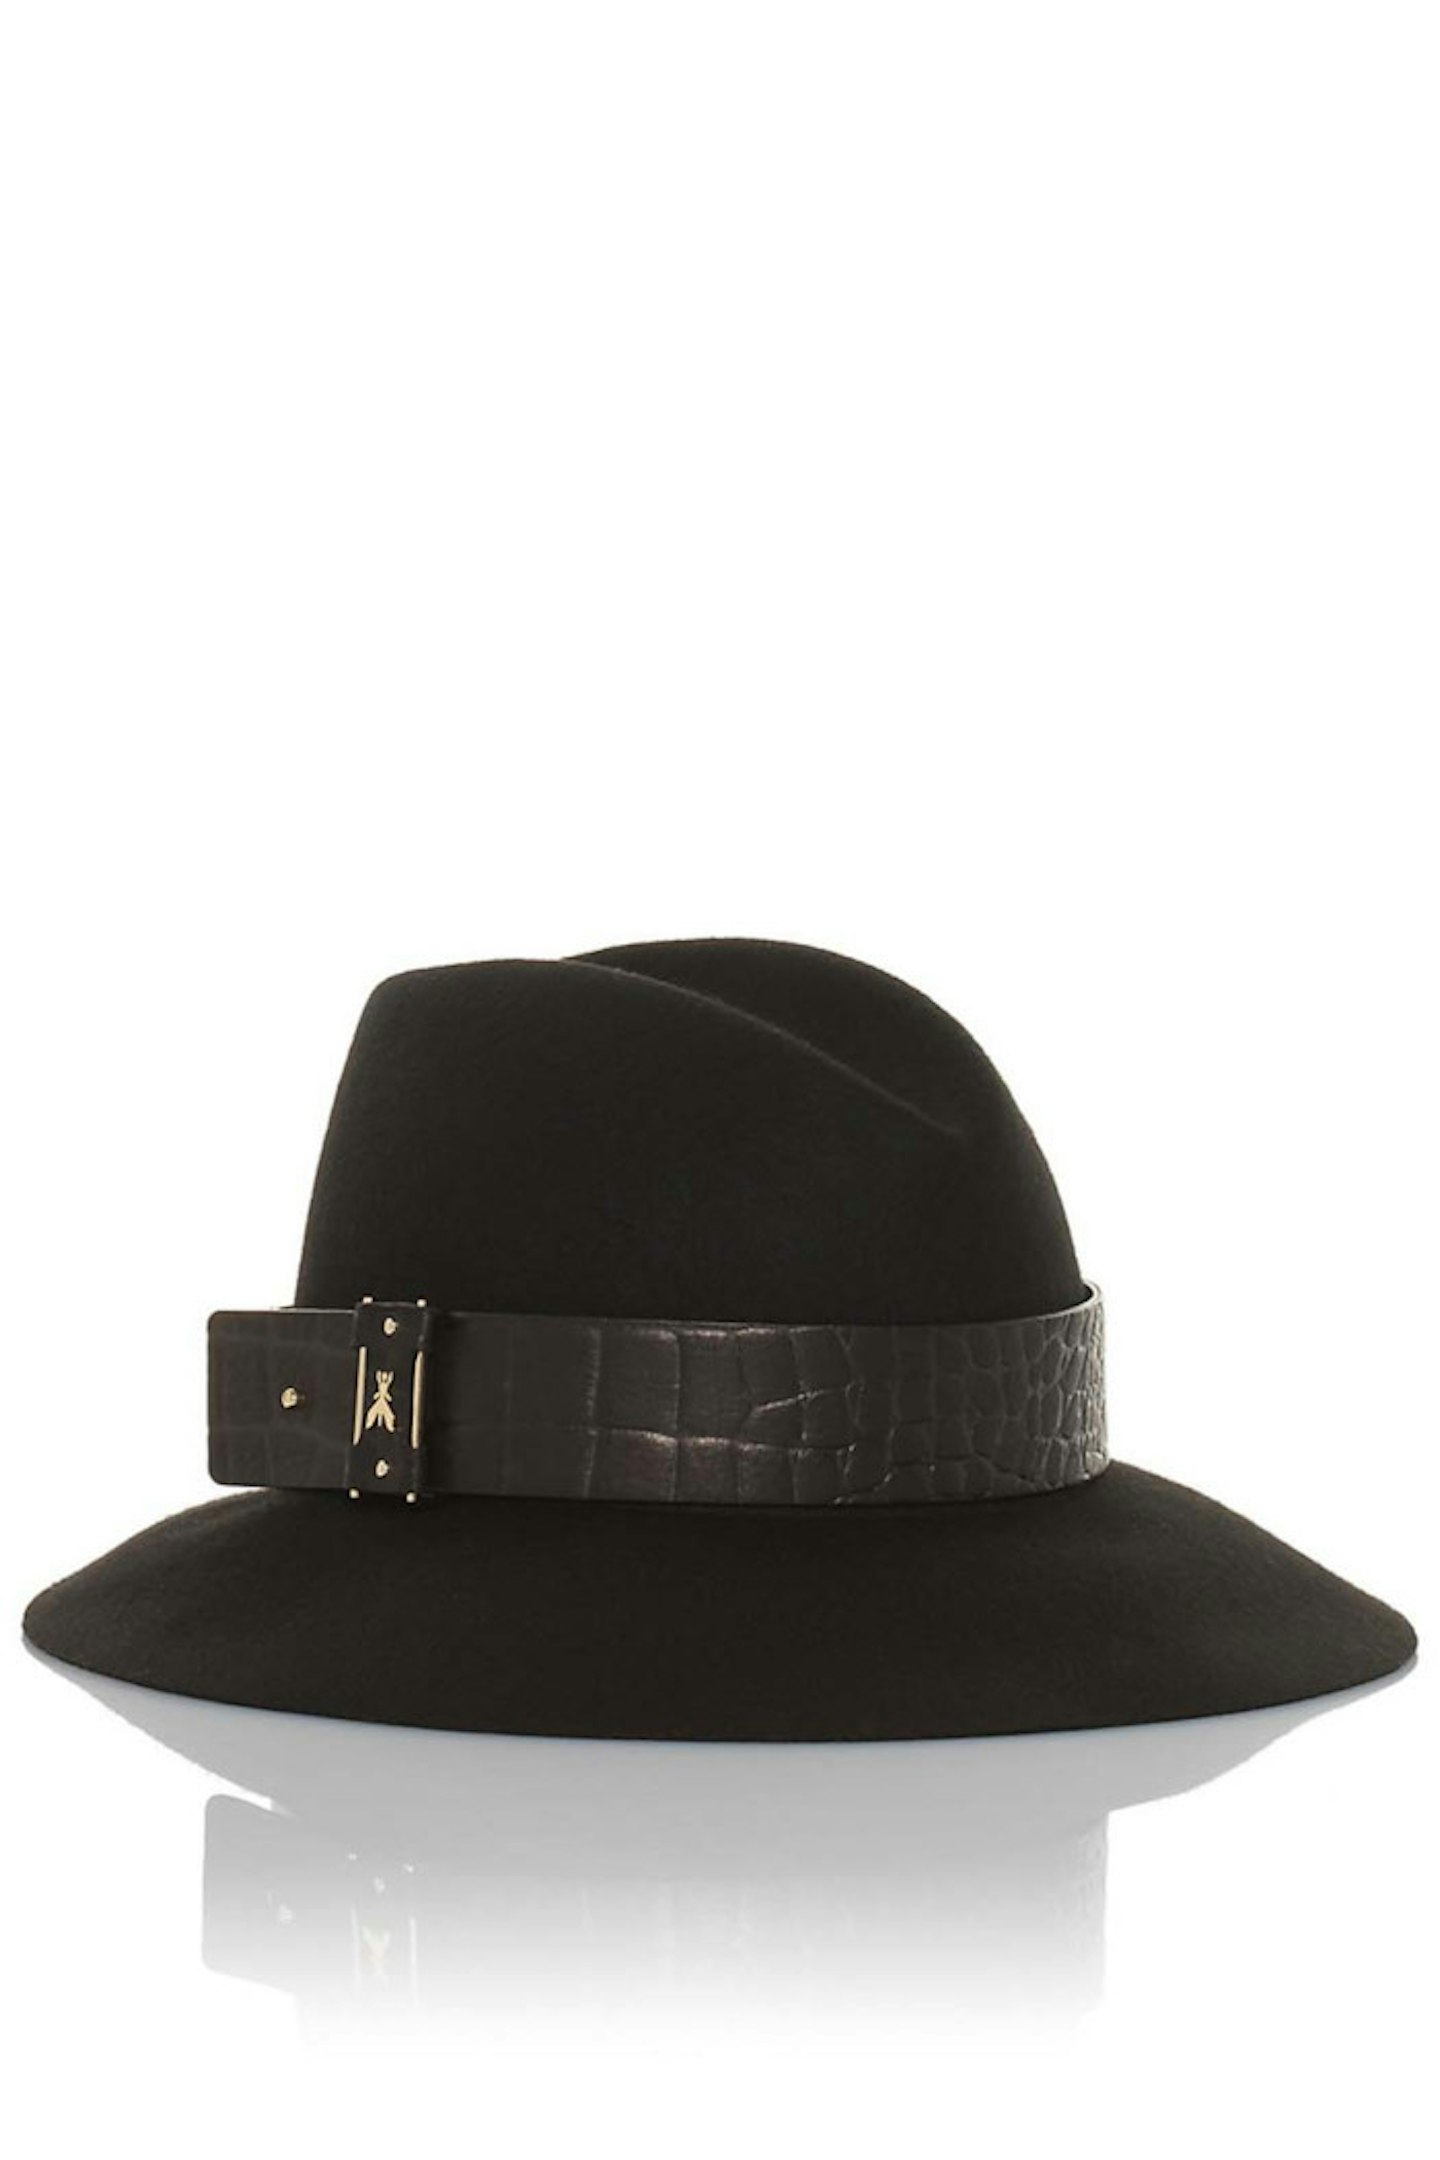 10. Patrizia Pepe Hat